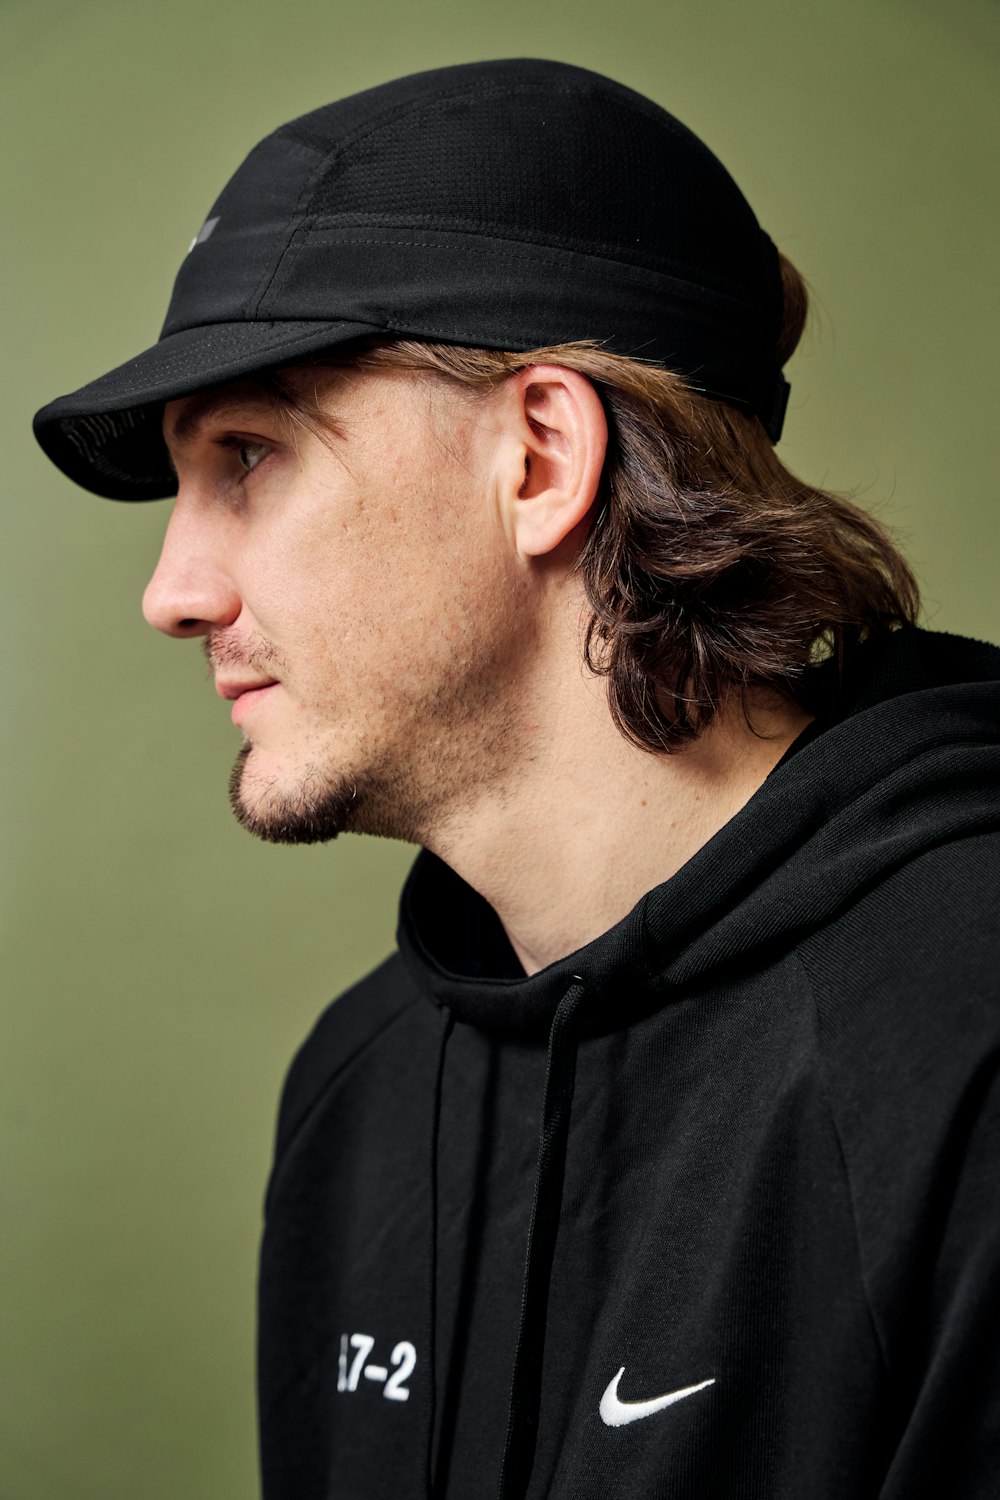 a man wearing a black hat and a black sweatshirt